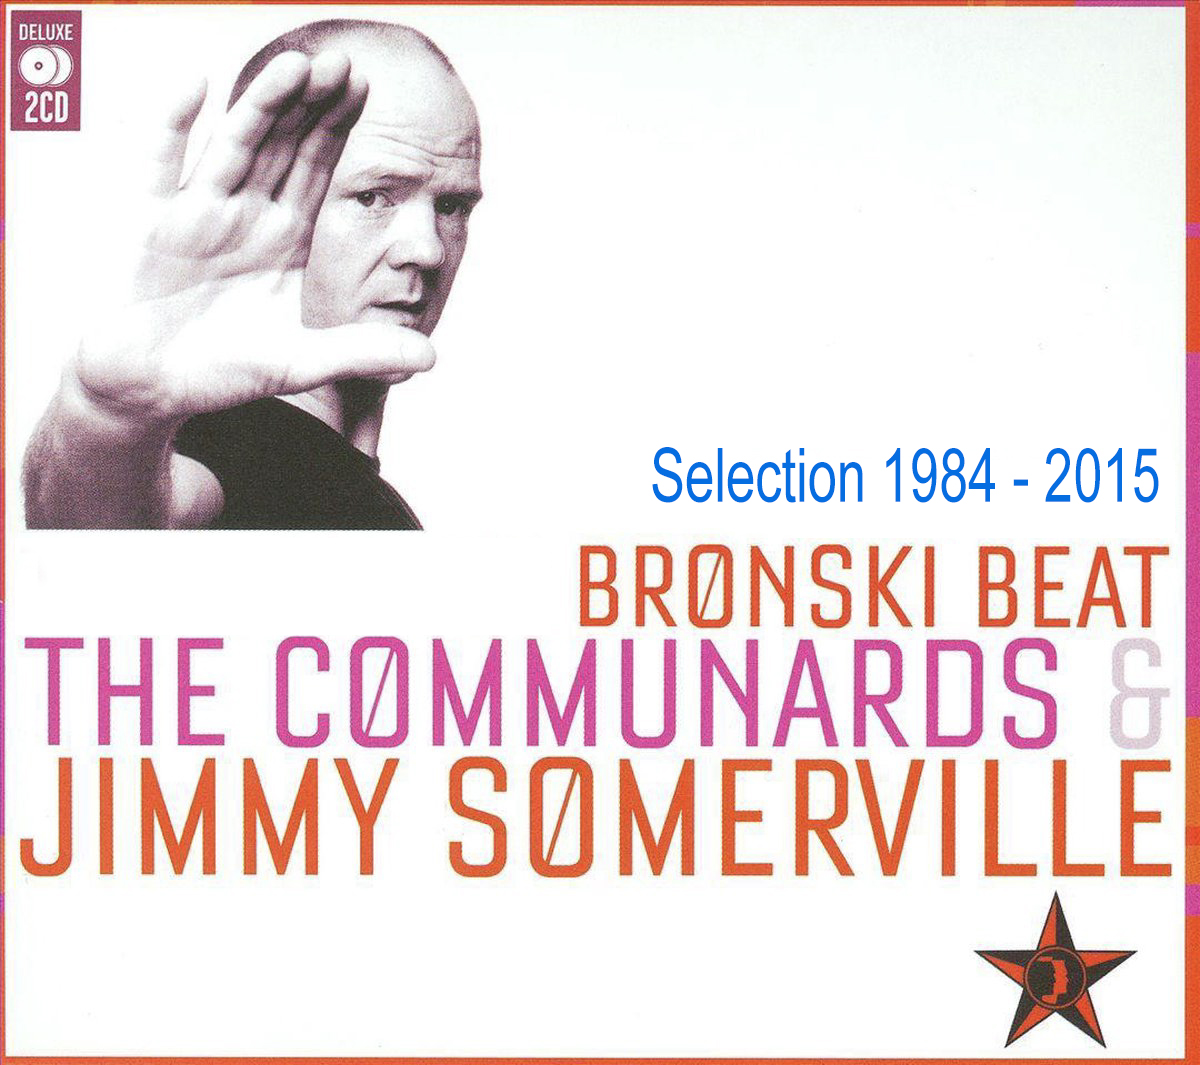 Bronski Beat, Communards, Jimmy Somerville - Selection 1984-2015